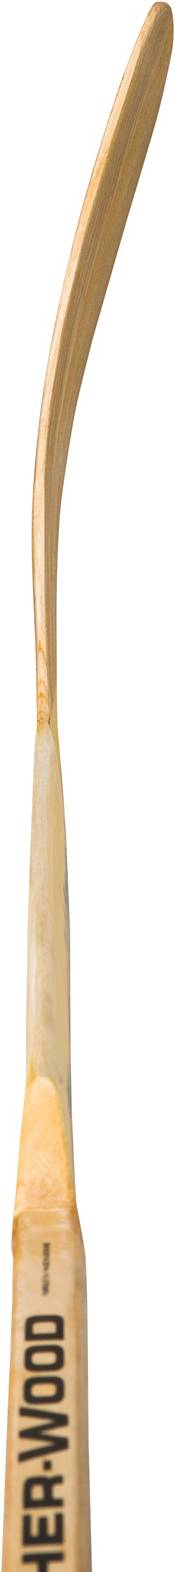 Sher-Wood Junior G530 Goalie Stick product image